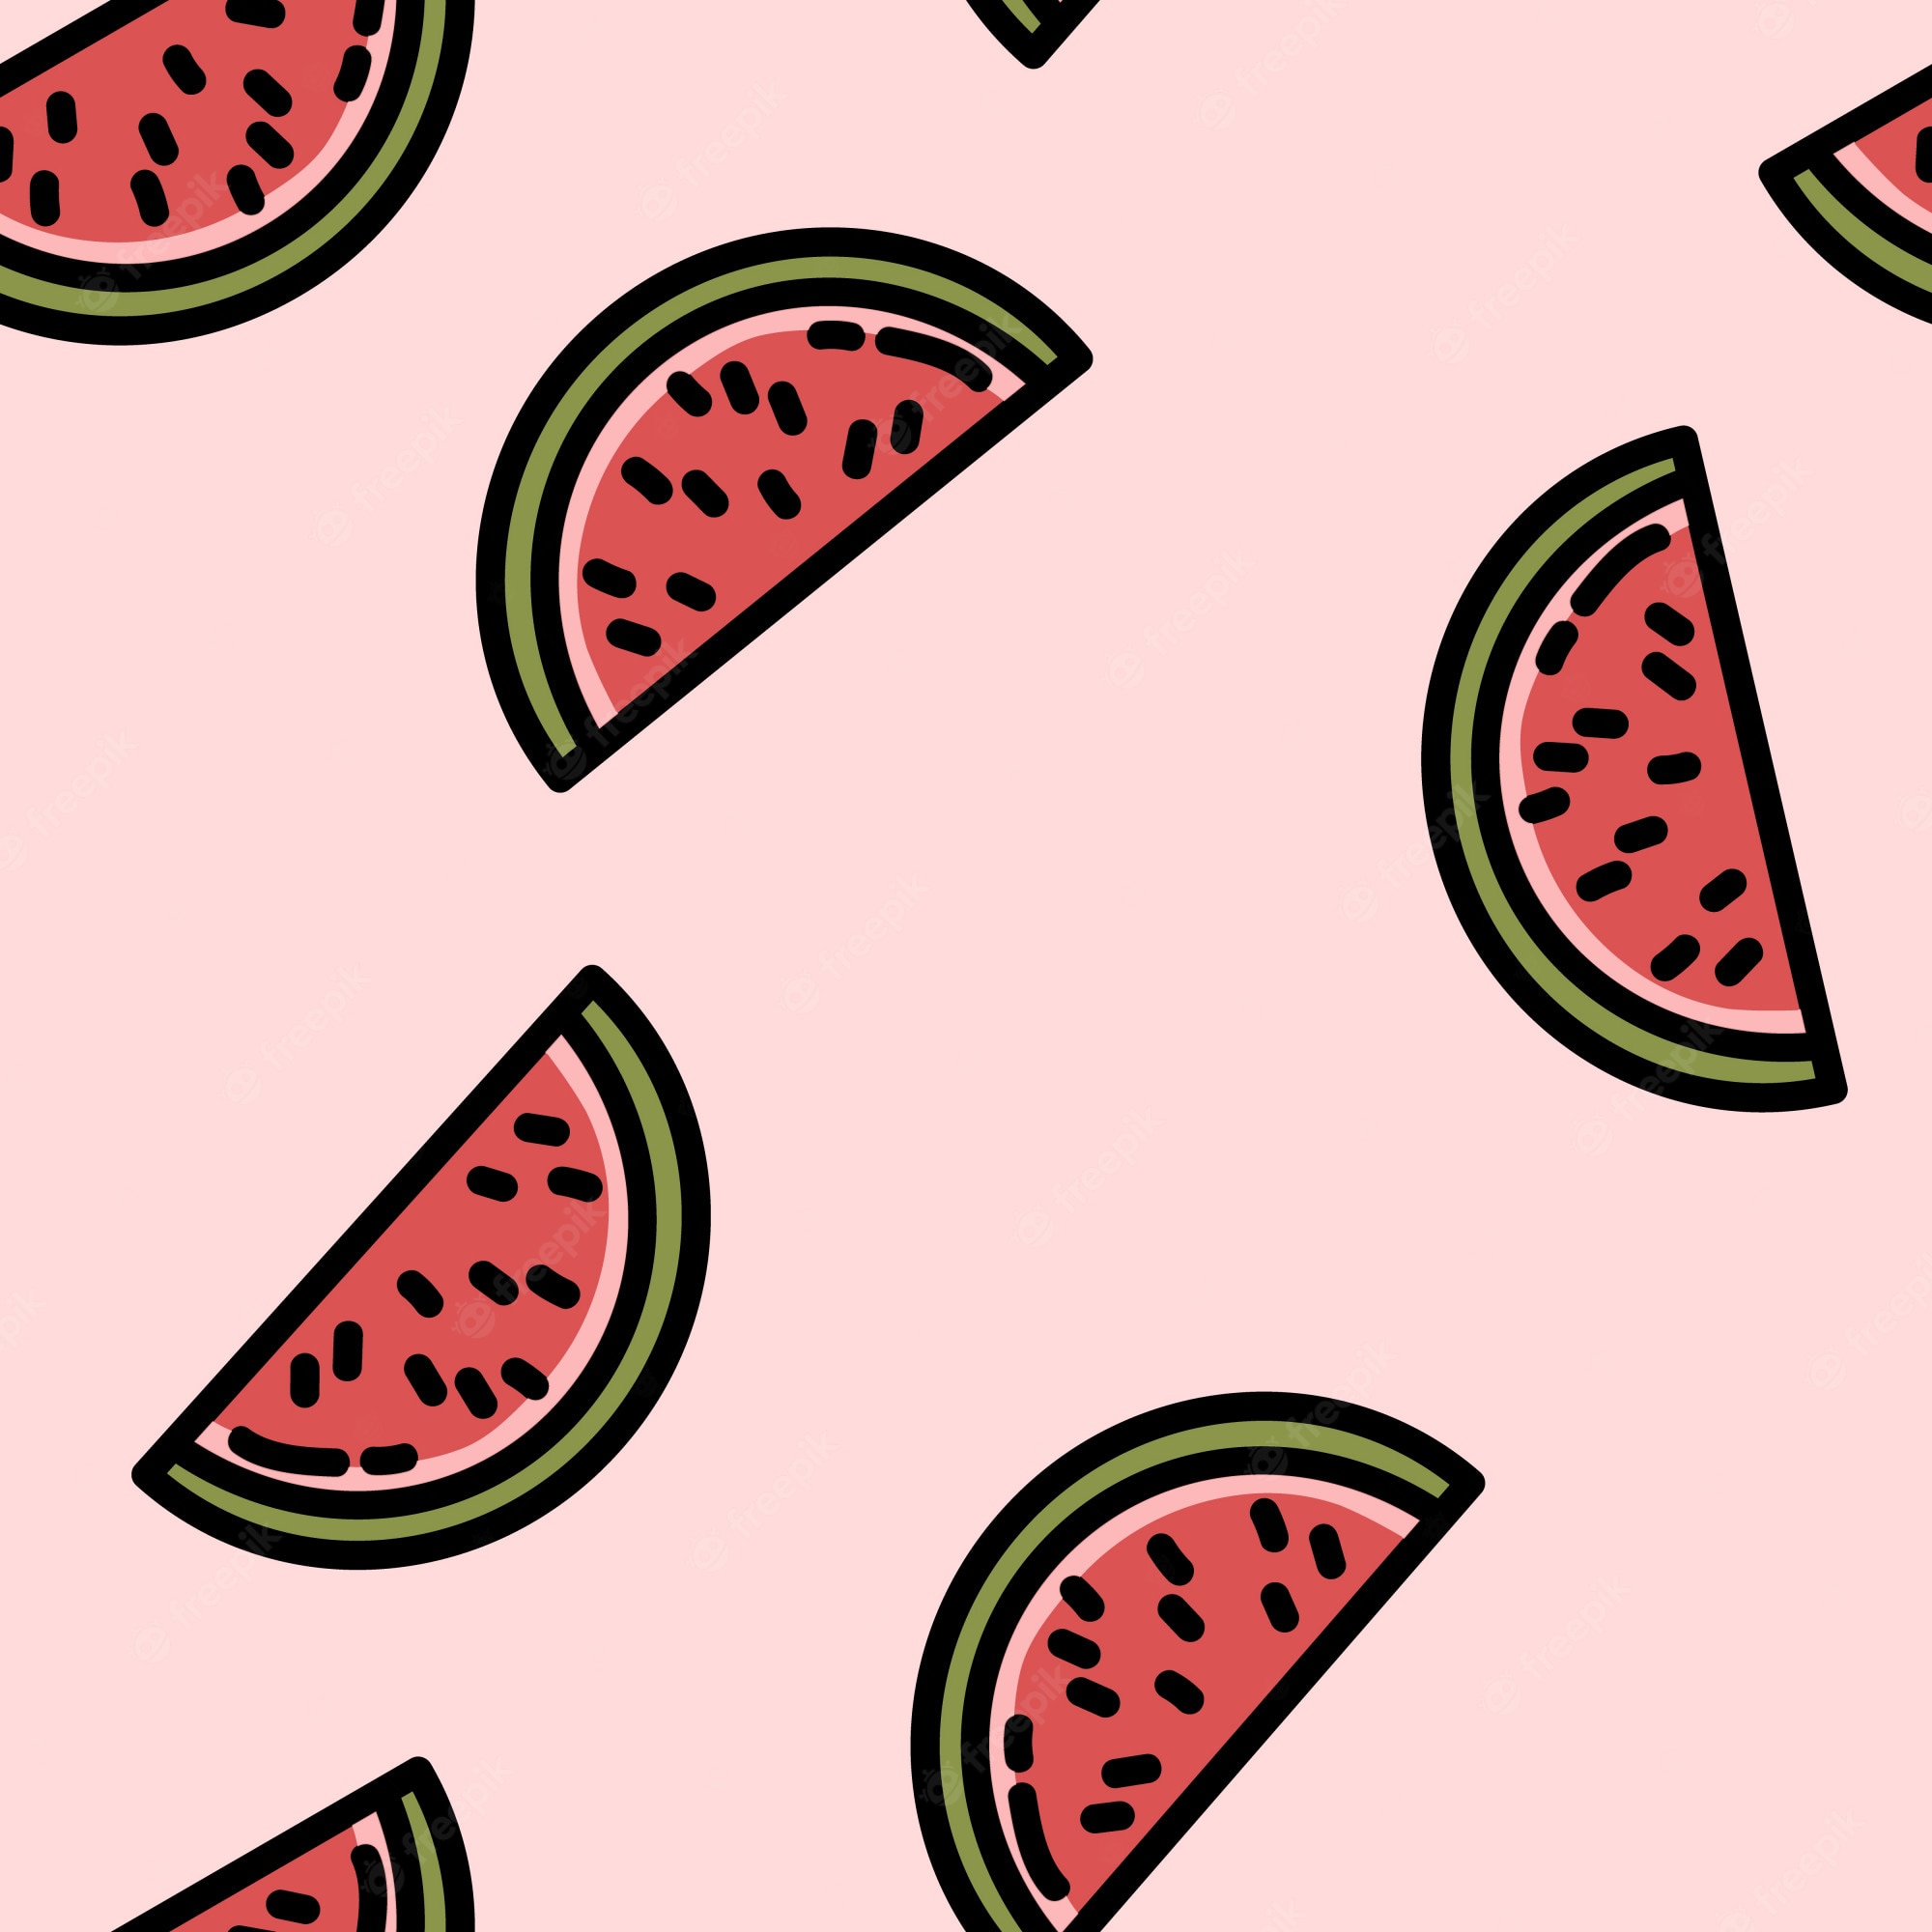 Cute Cartoon Watermelon Wallpapers